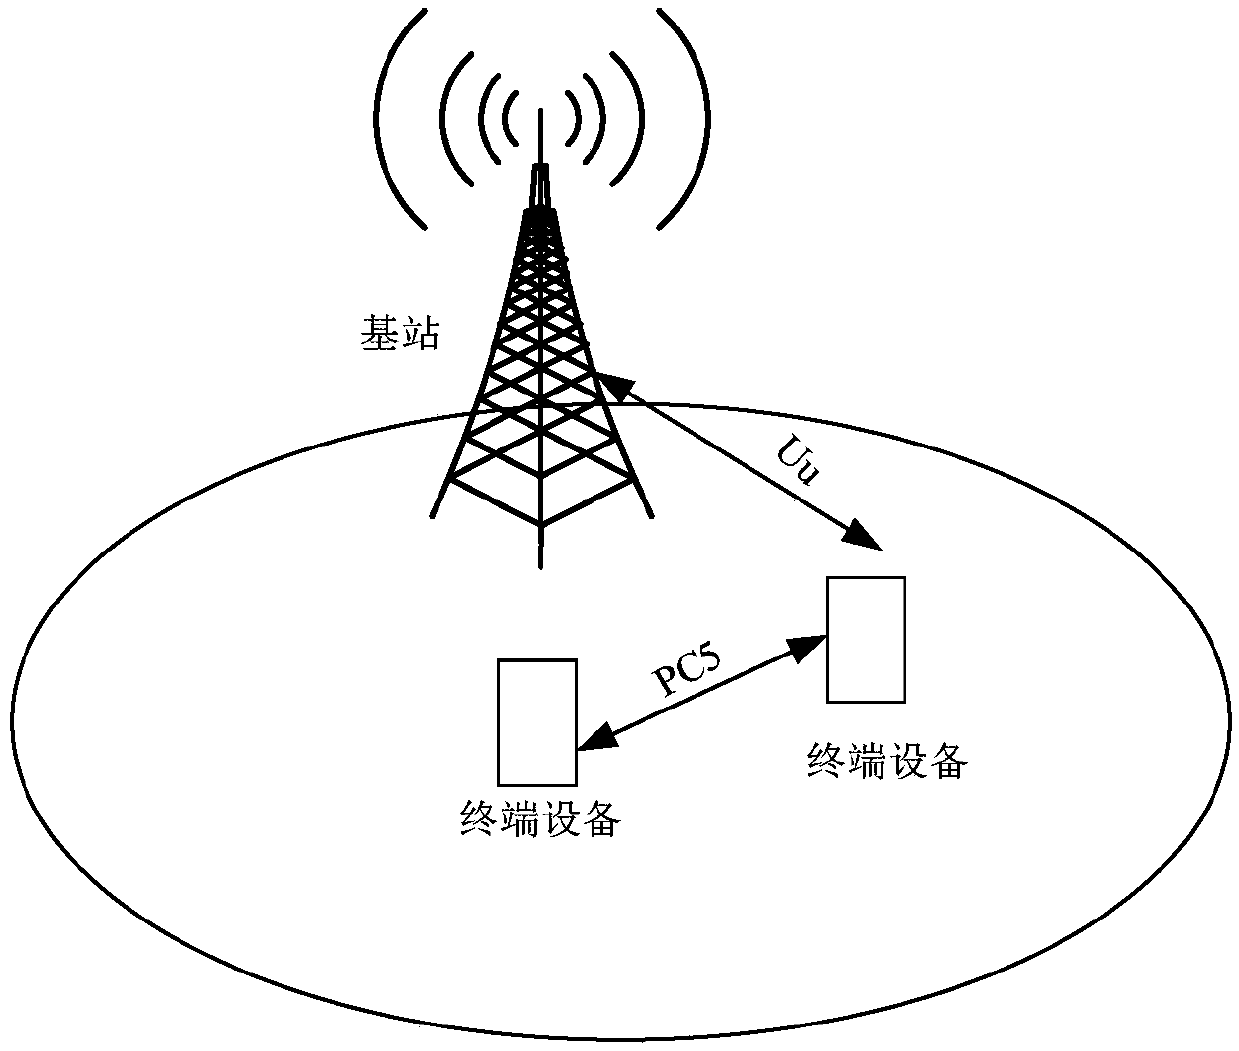 V2X communication method and device